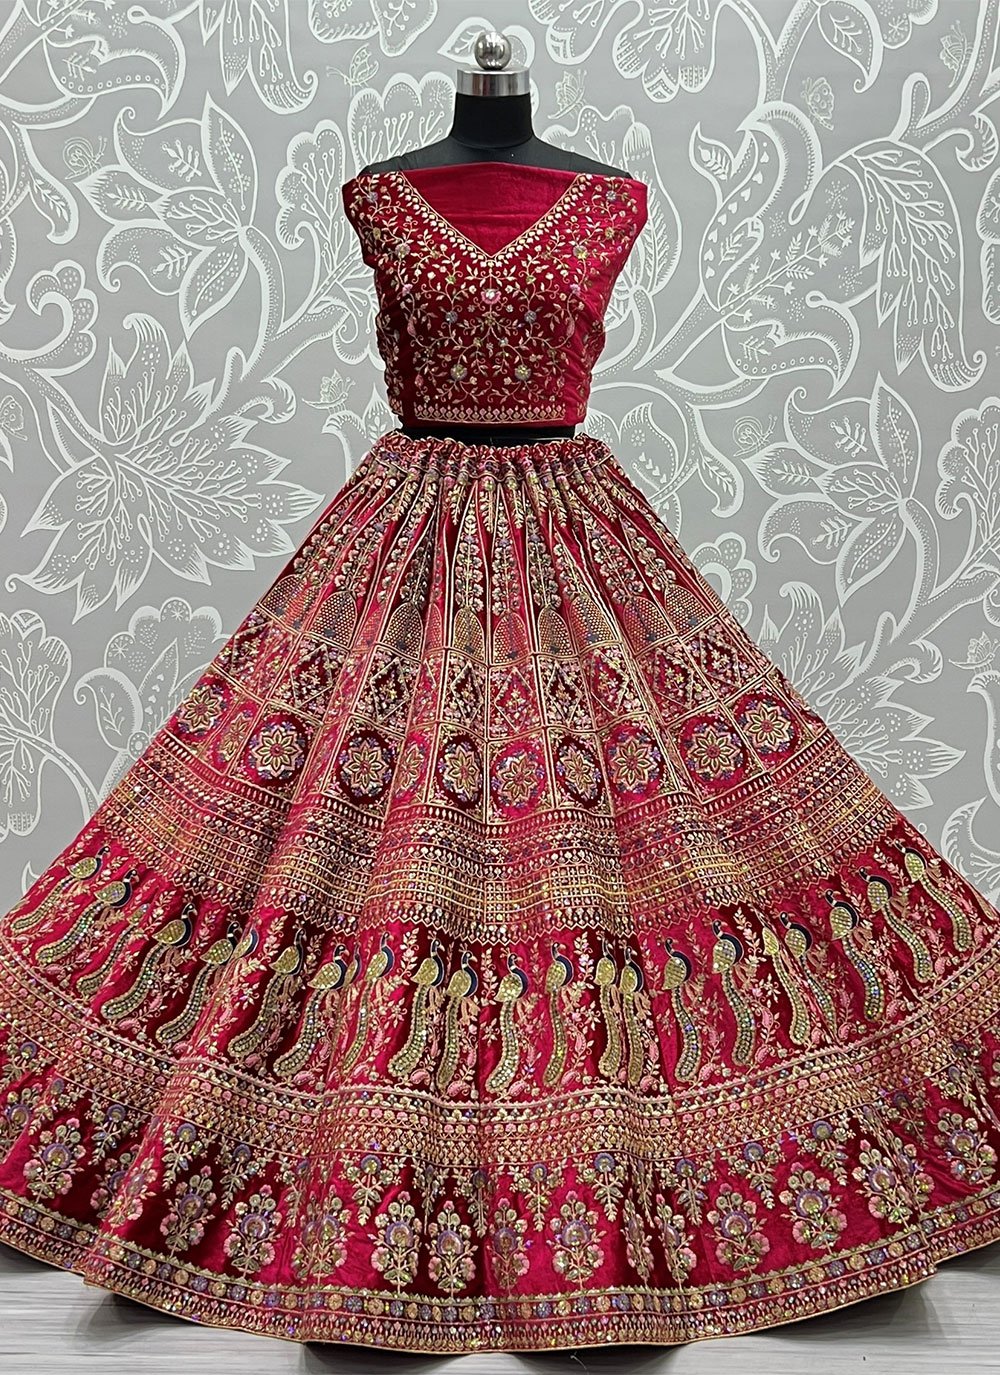 Lehenga Choli Velvet Pink Embroidered Lehenga Choli